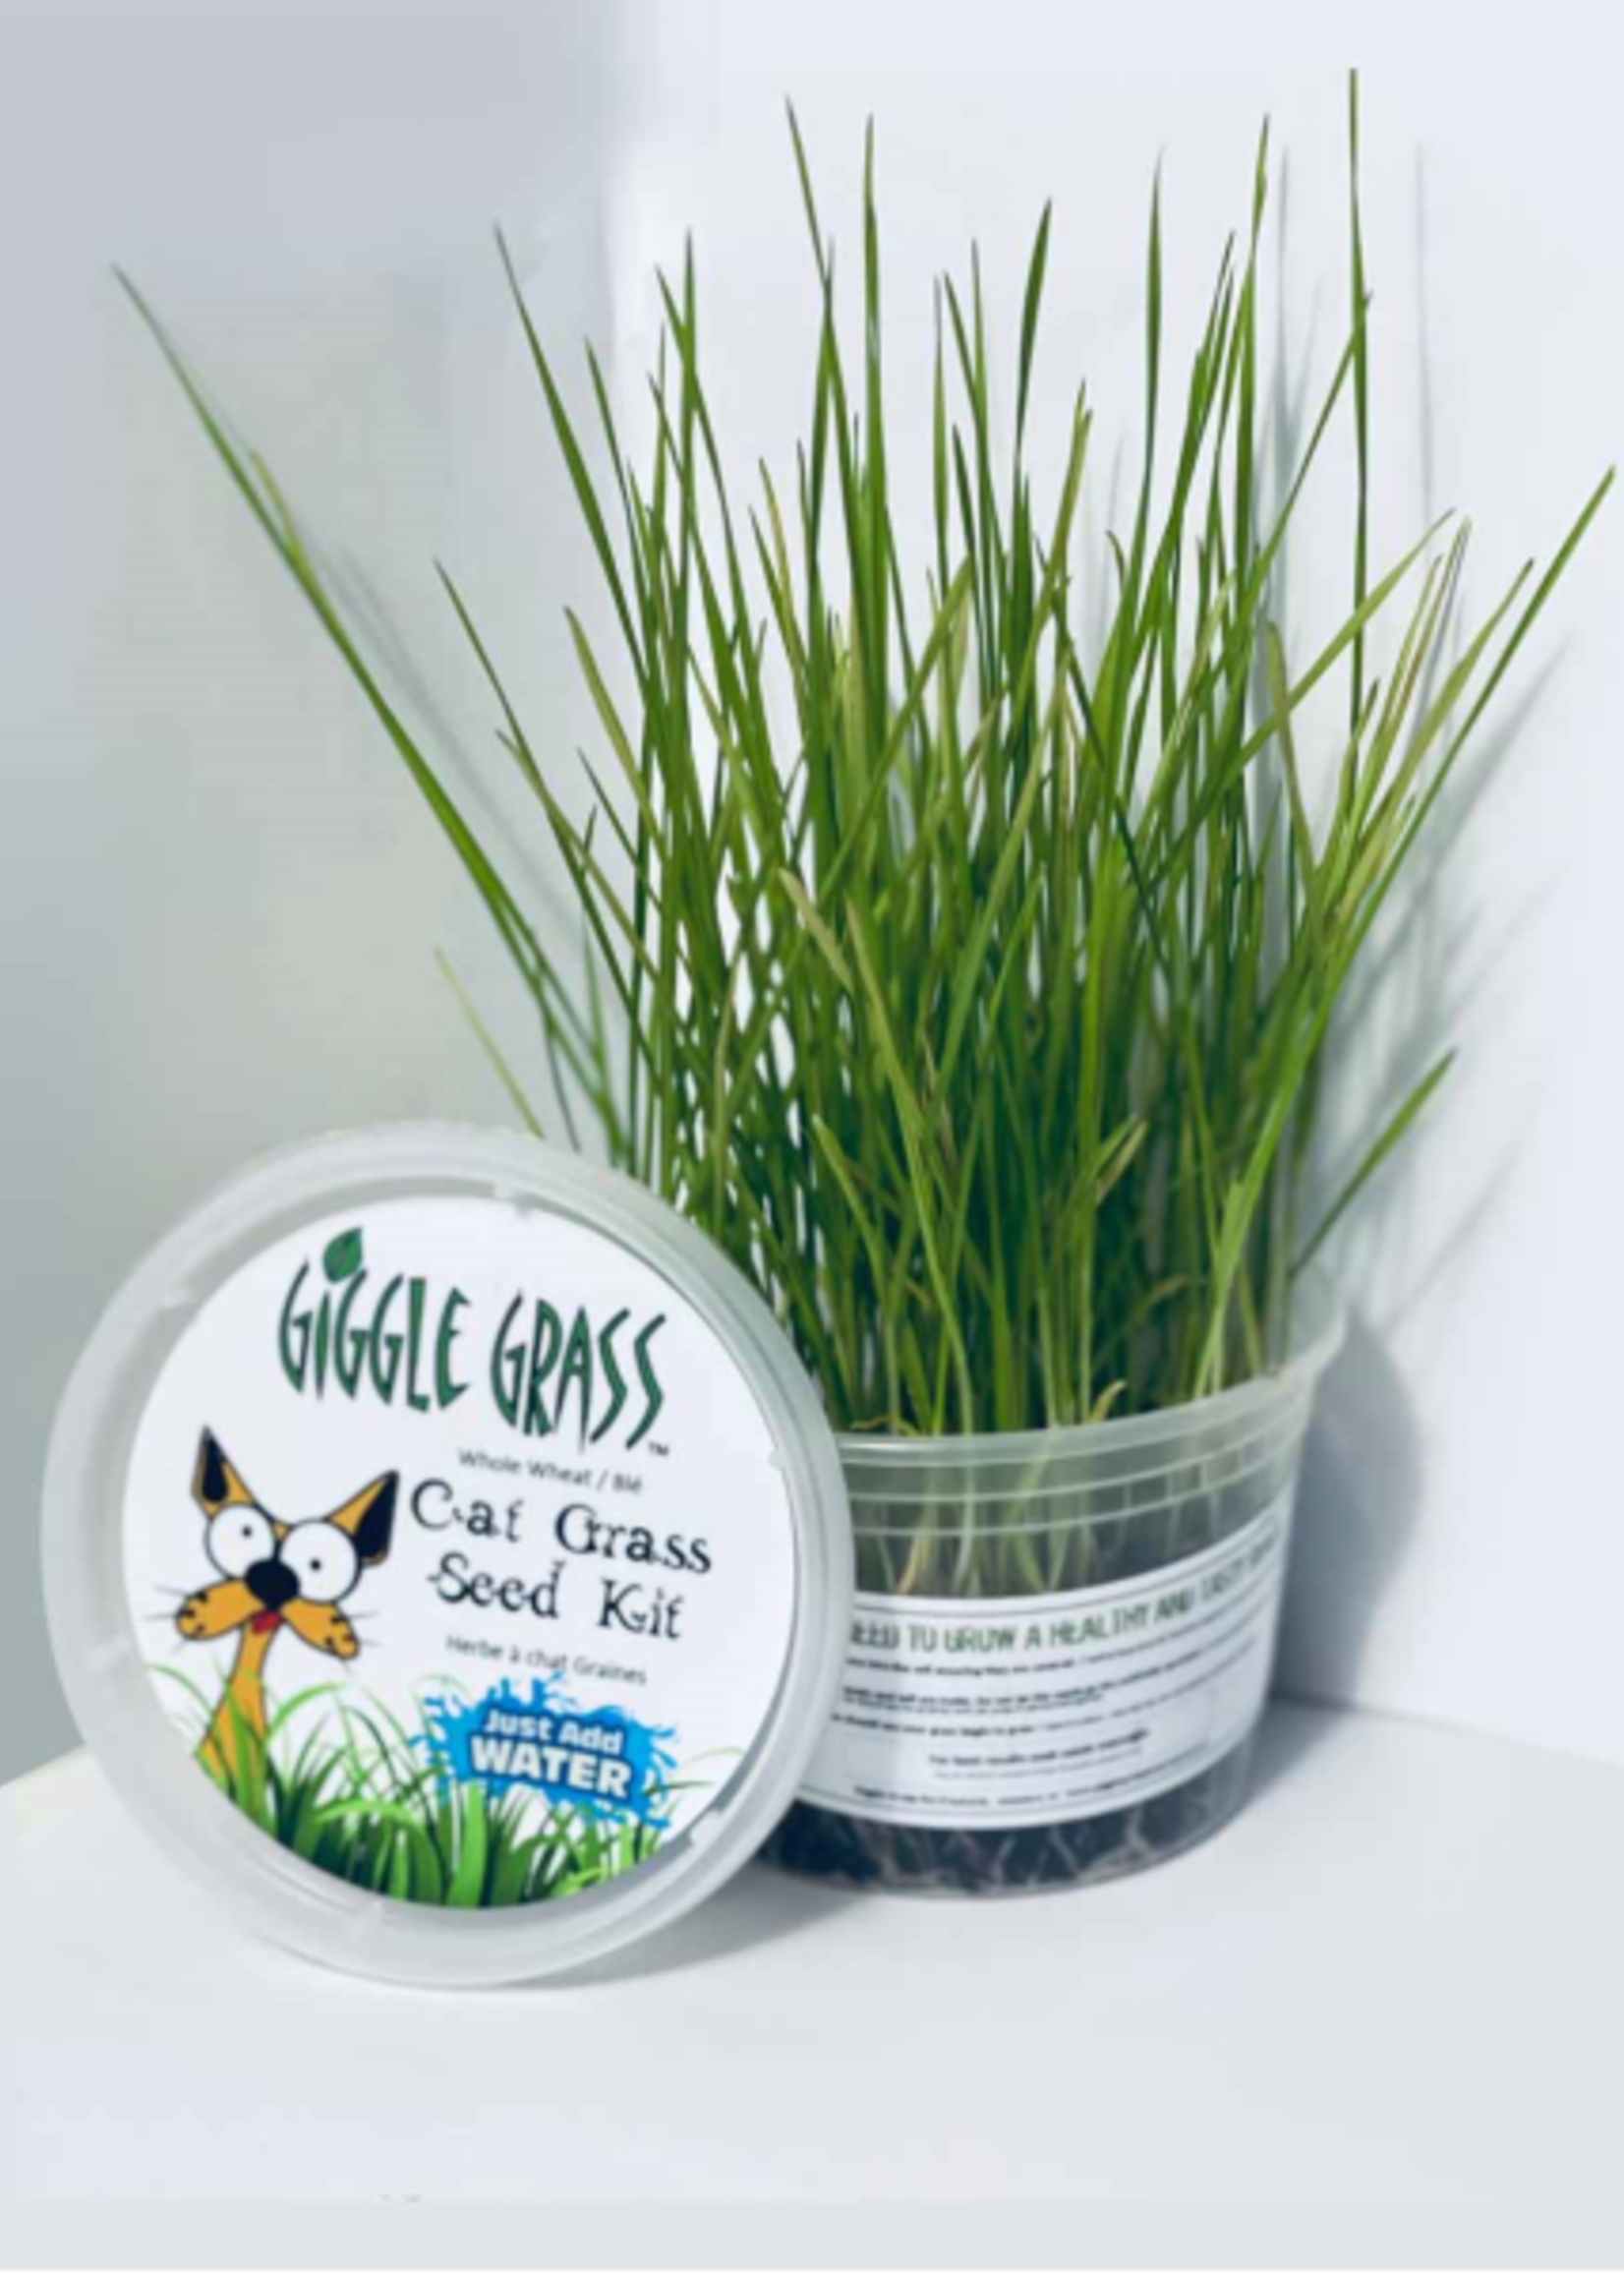 Giggle Grass Giggle Grass Cat Grass Seed Kit